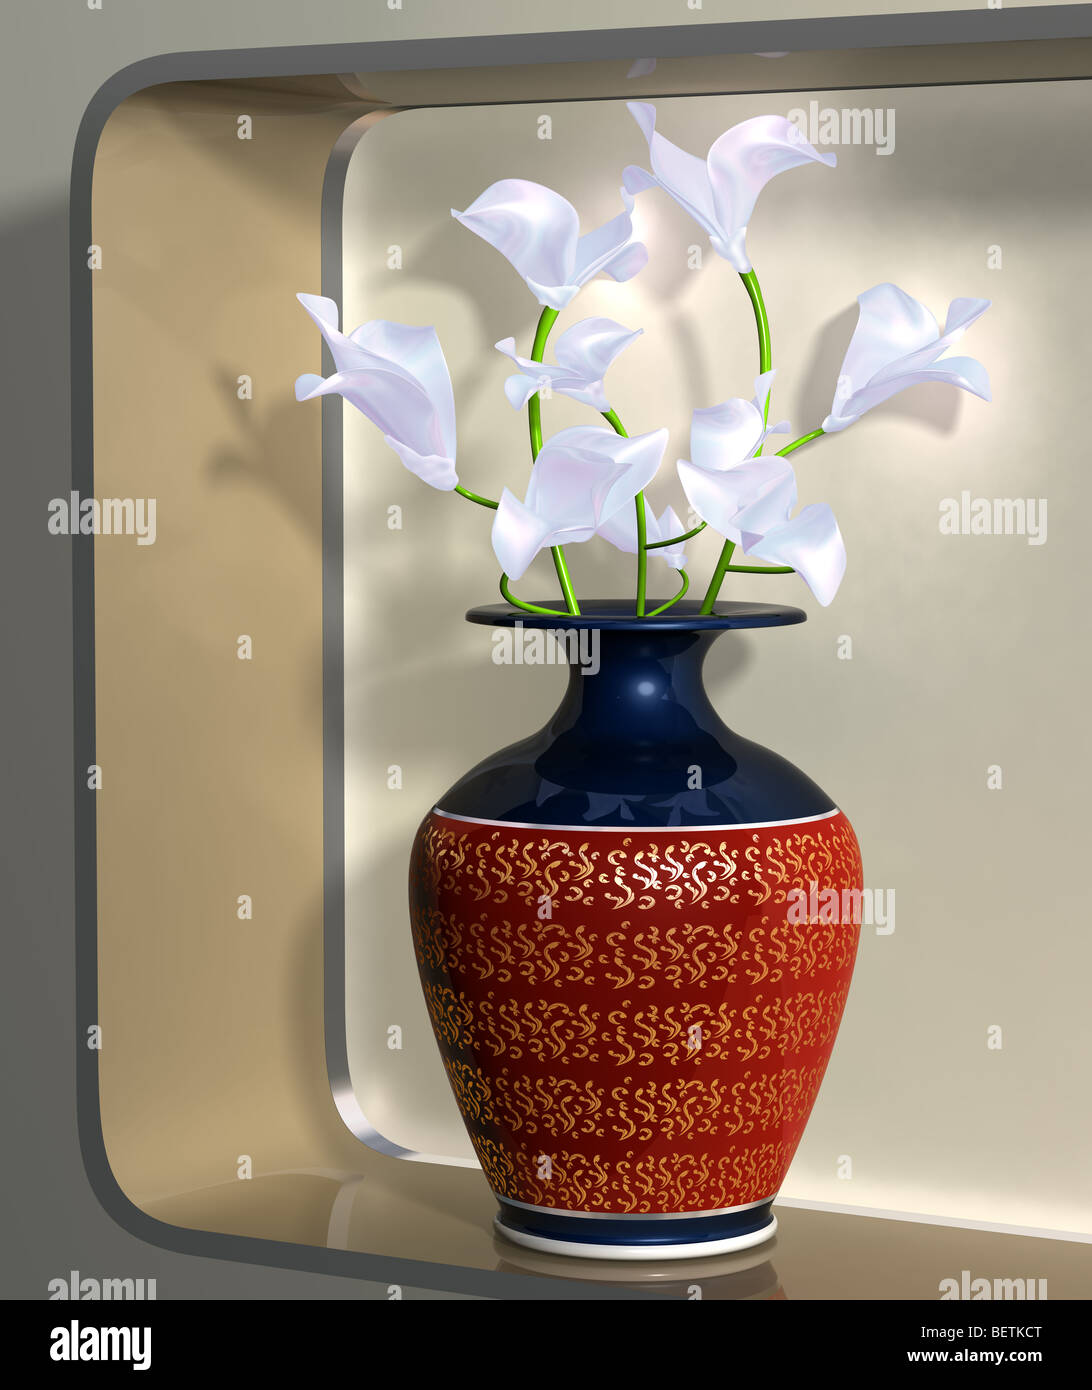 Illustration of a vase of elegant flowers on a modern shelf Stock Photo